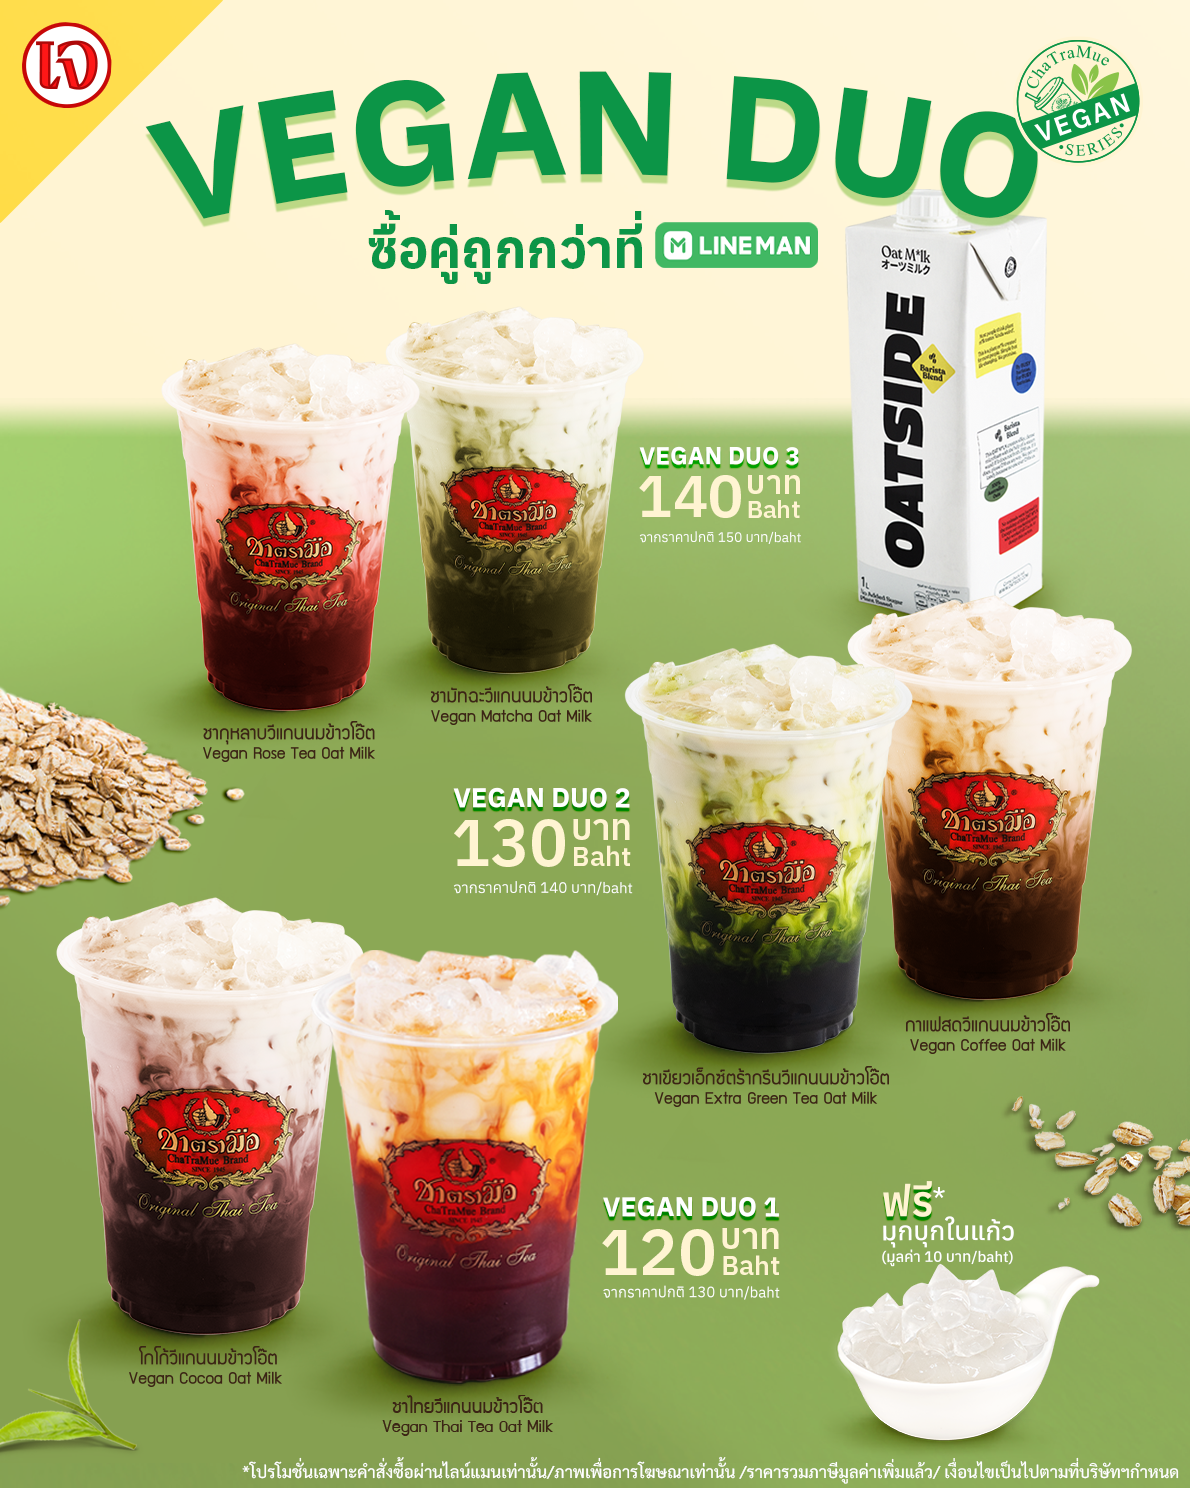 ChaTraMue Vegan Duo Set Discount 10 Baht only at Line Man